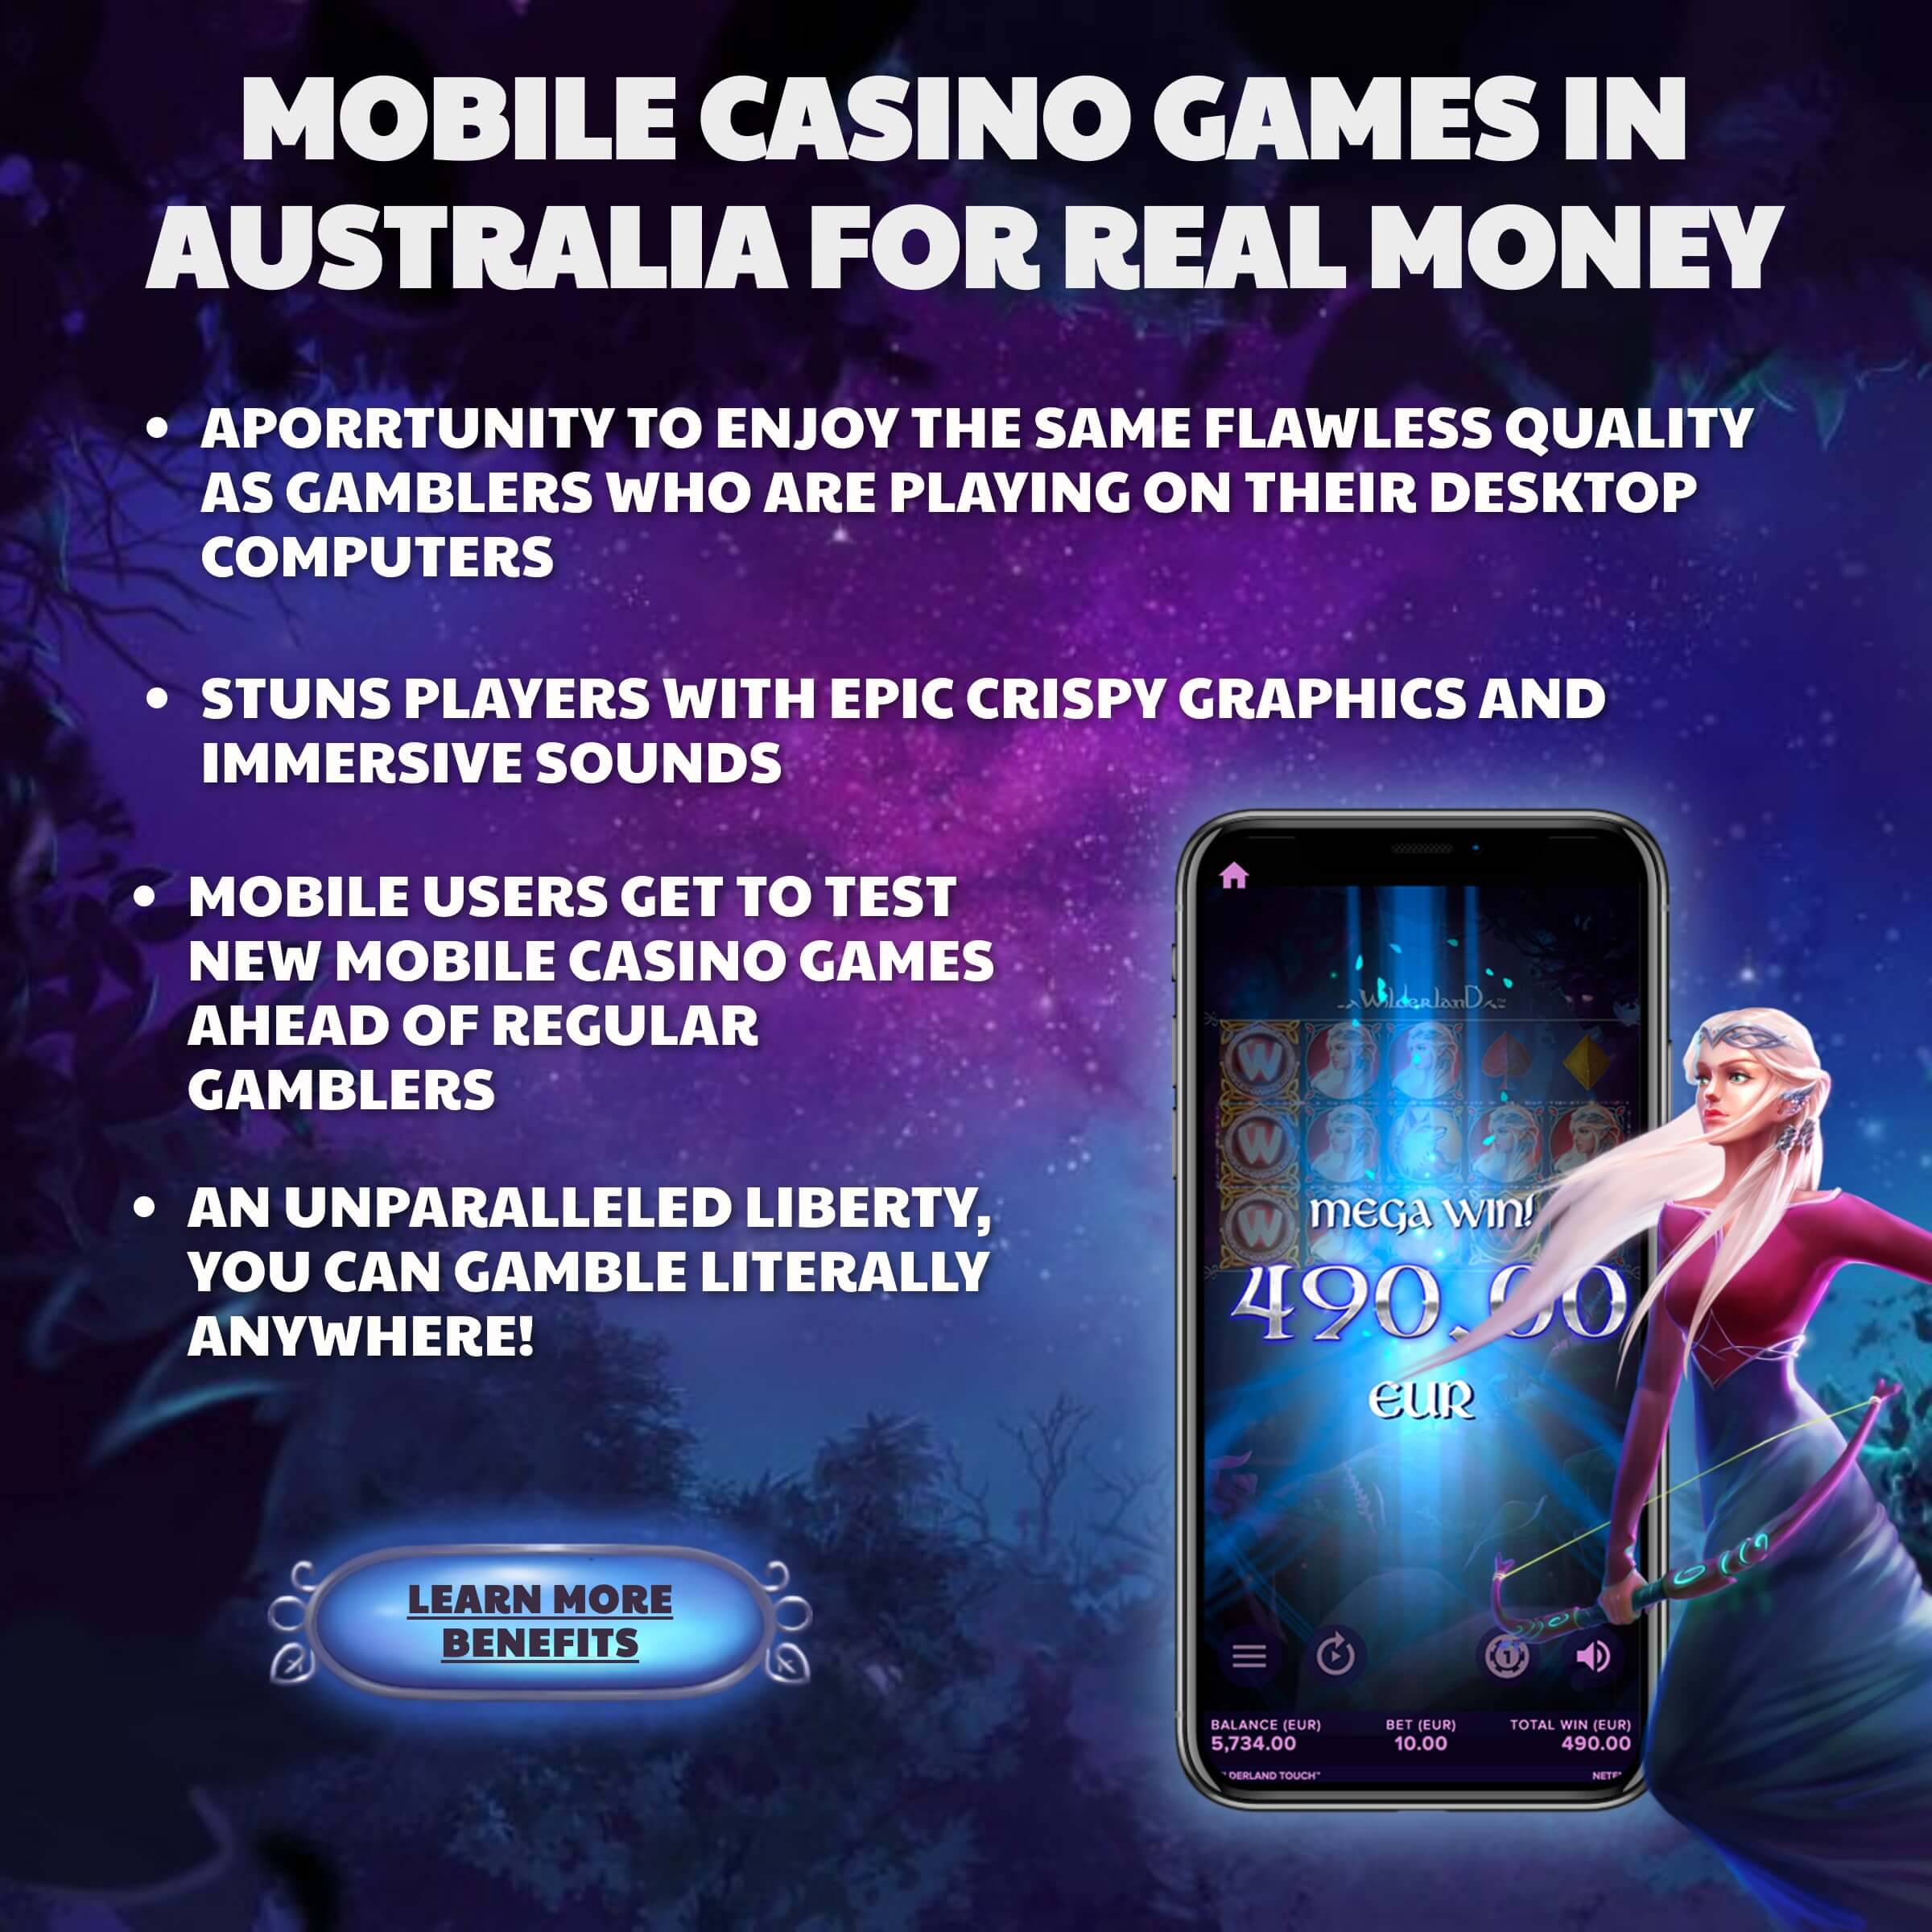 mobile casino games in australia for real money